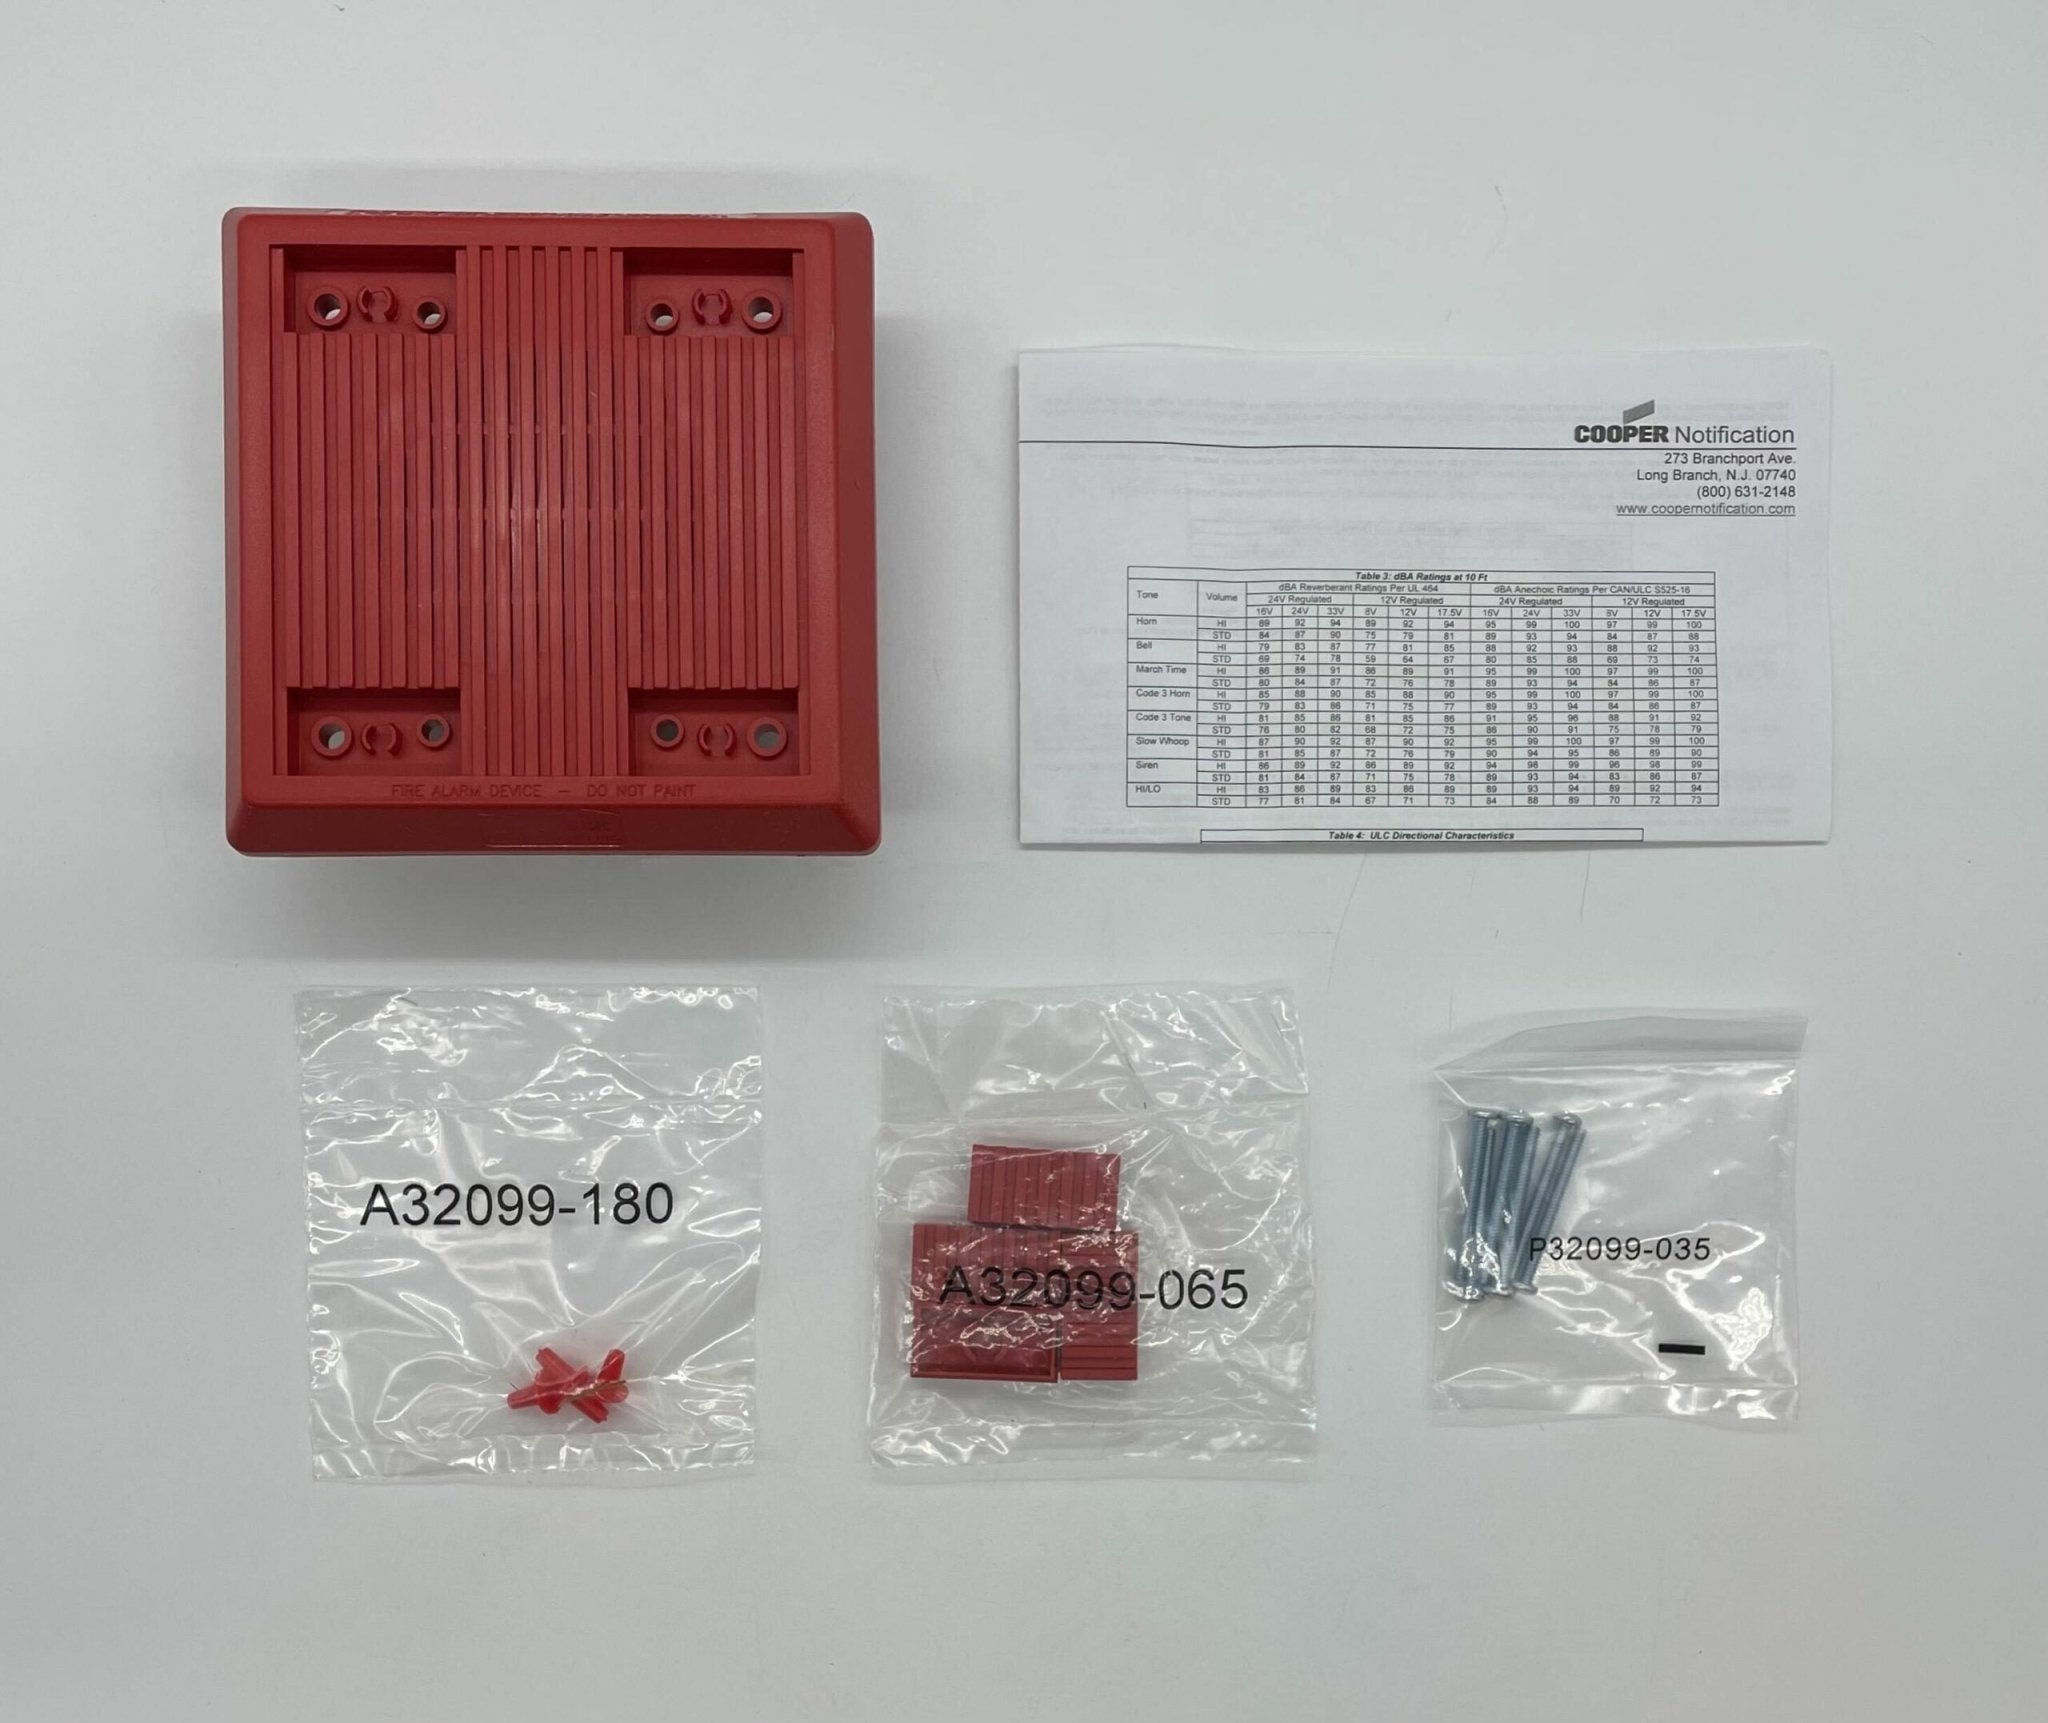 Wheelock MT-12/24-R - The Fire Alarm Supplier